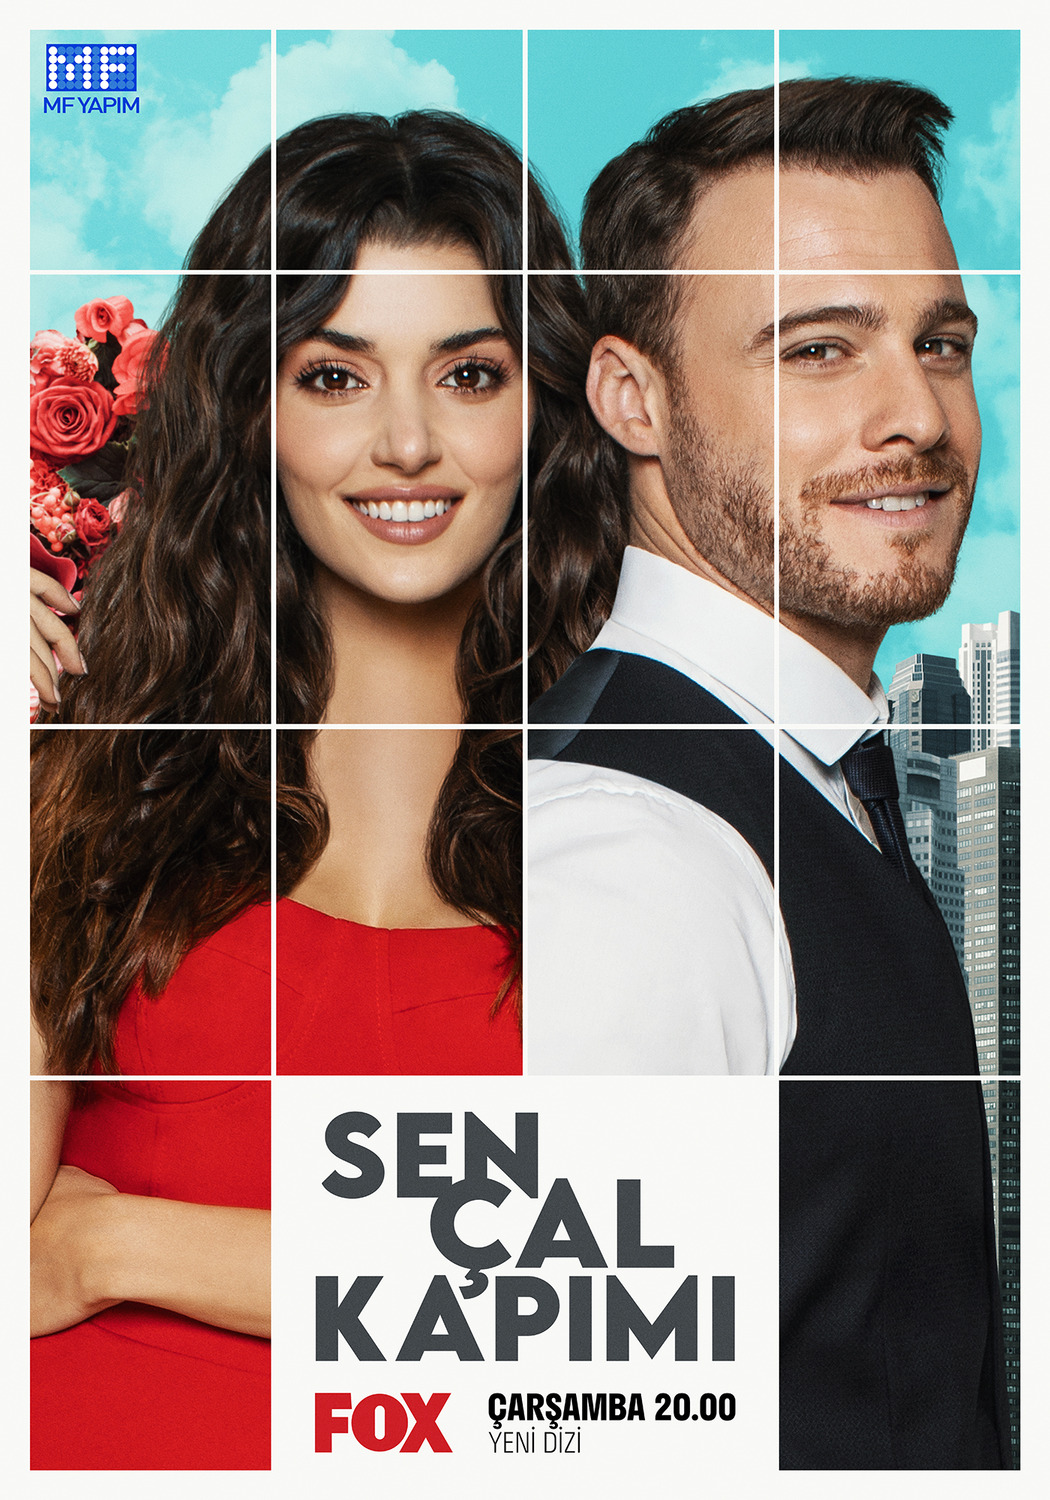 Extra Large TV Poster Image for Sen Çal Kapimi (#2 of 2)